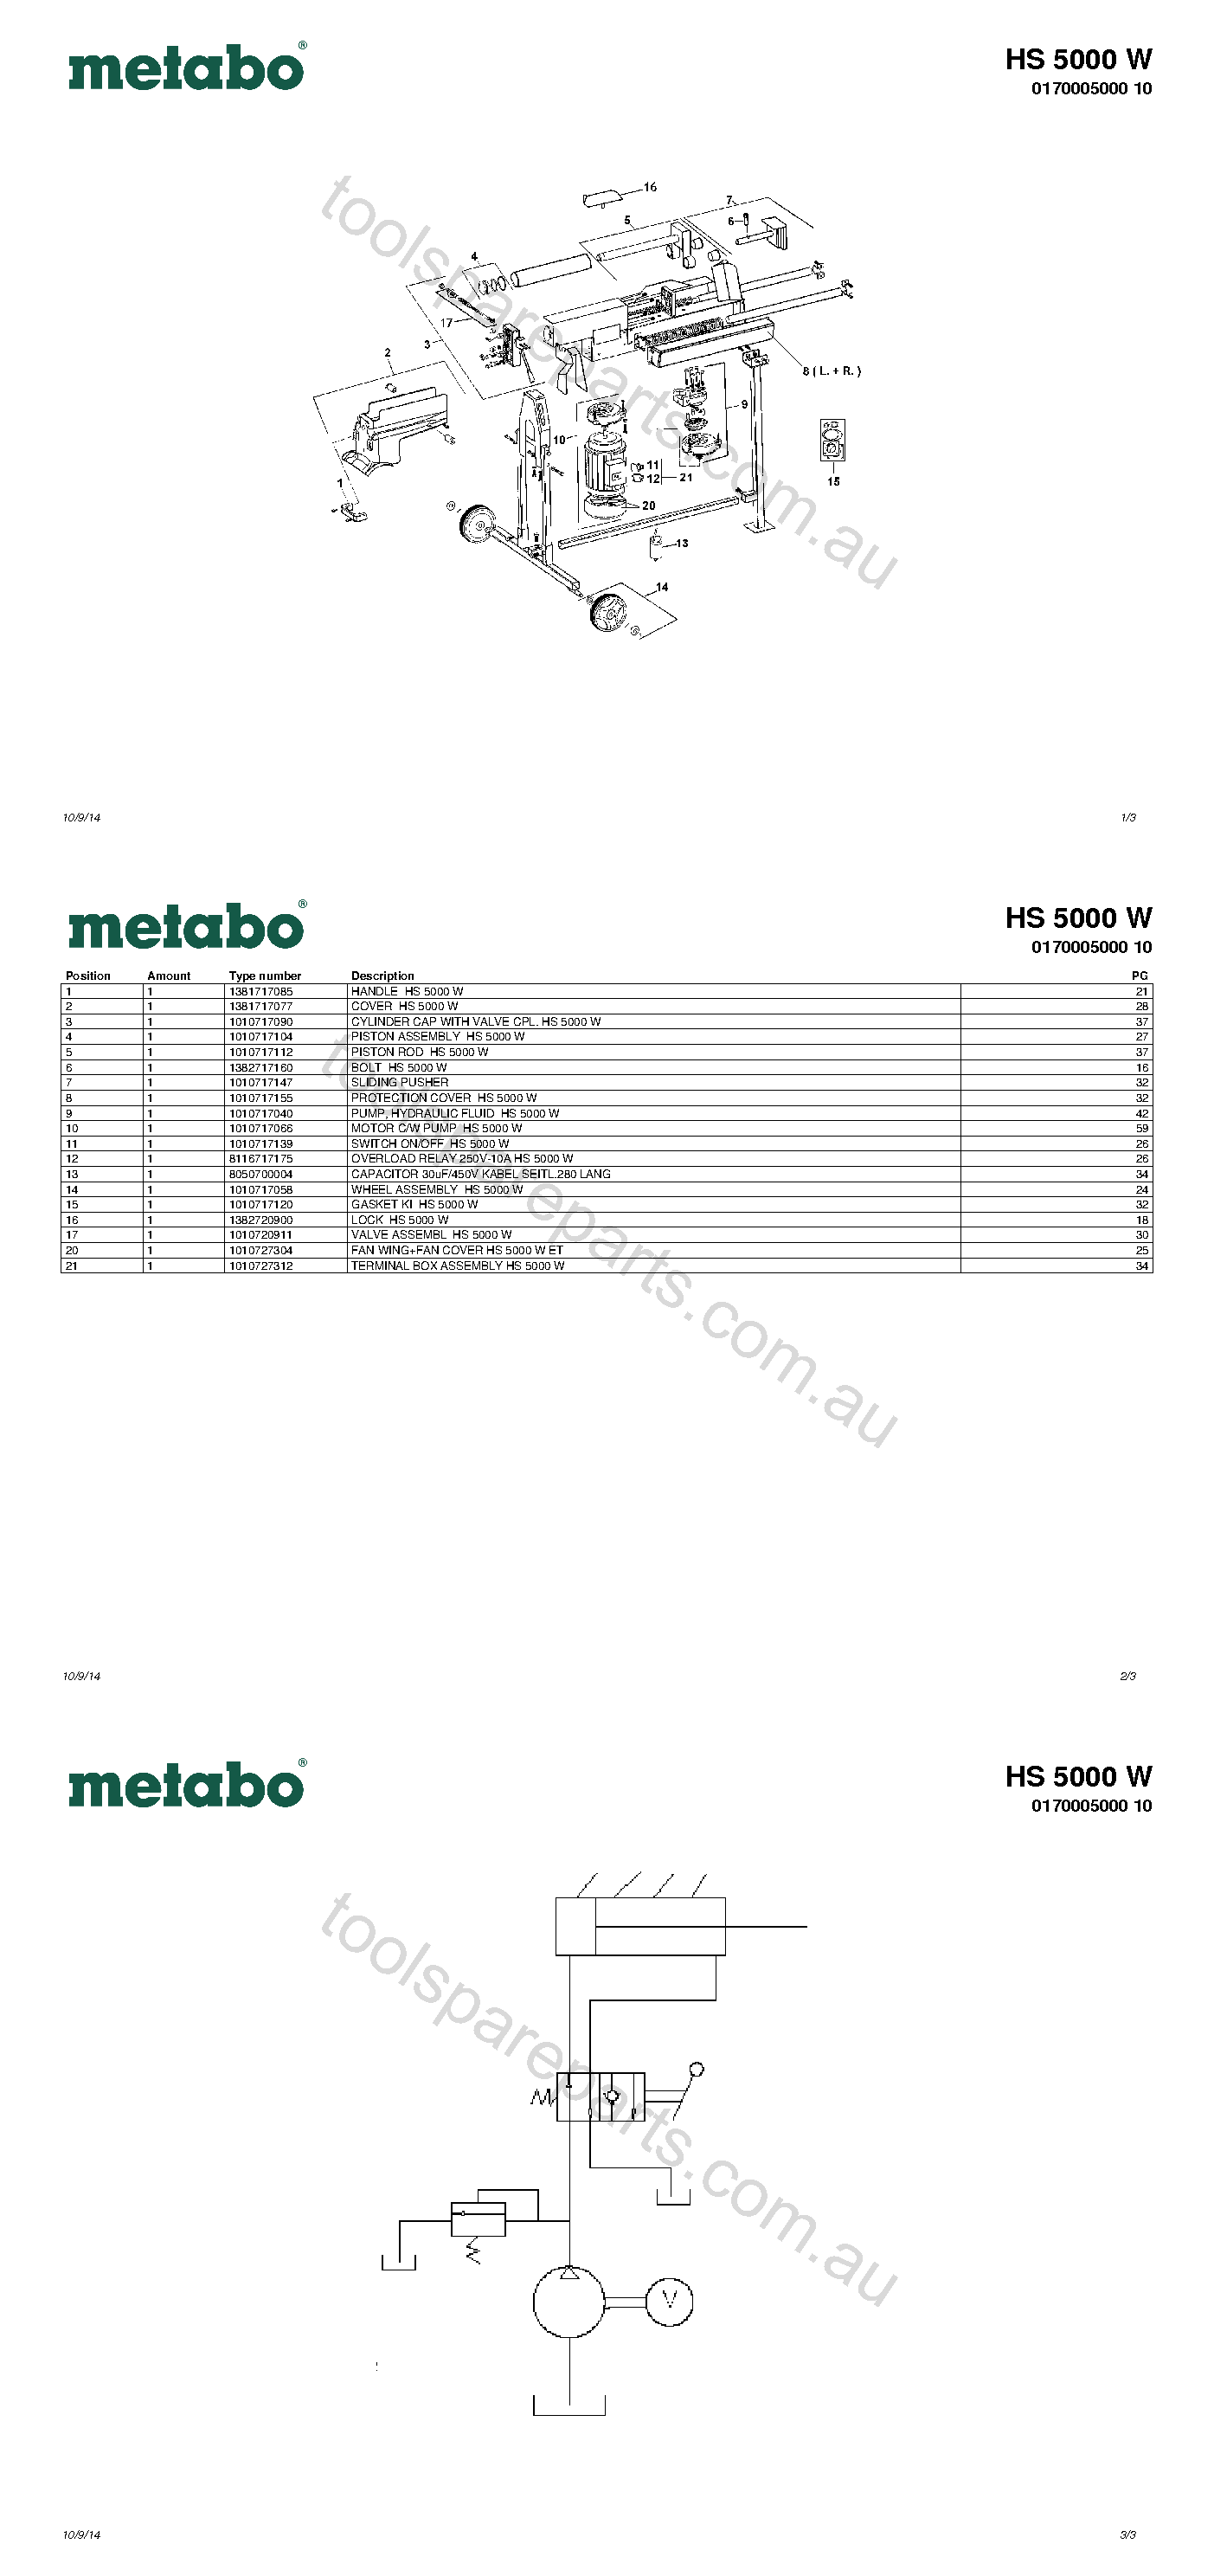 Metabo HS 5000 W 0170005000 10  Diagram 1